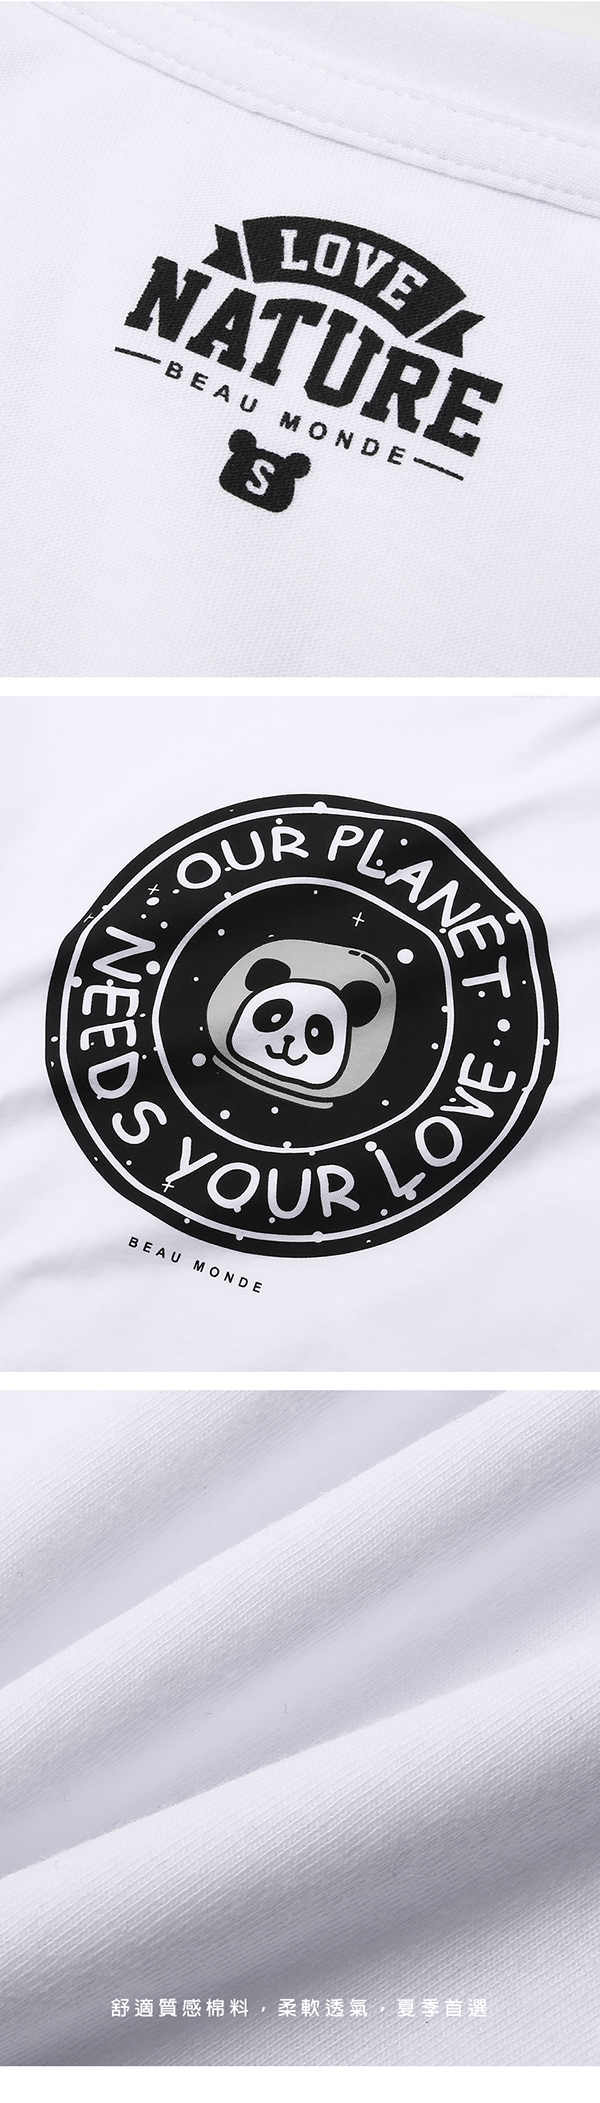 GIORDANO 女裝可愛熊貓短袖印花T恤-41 標誌黑